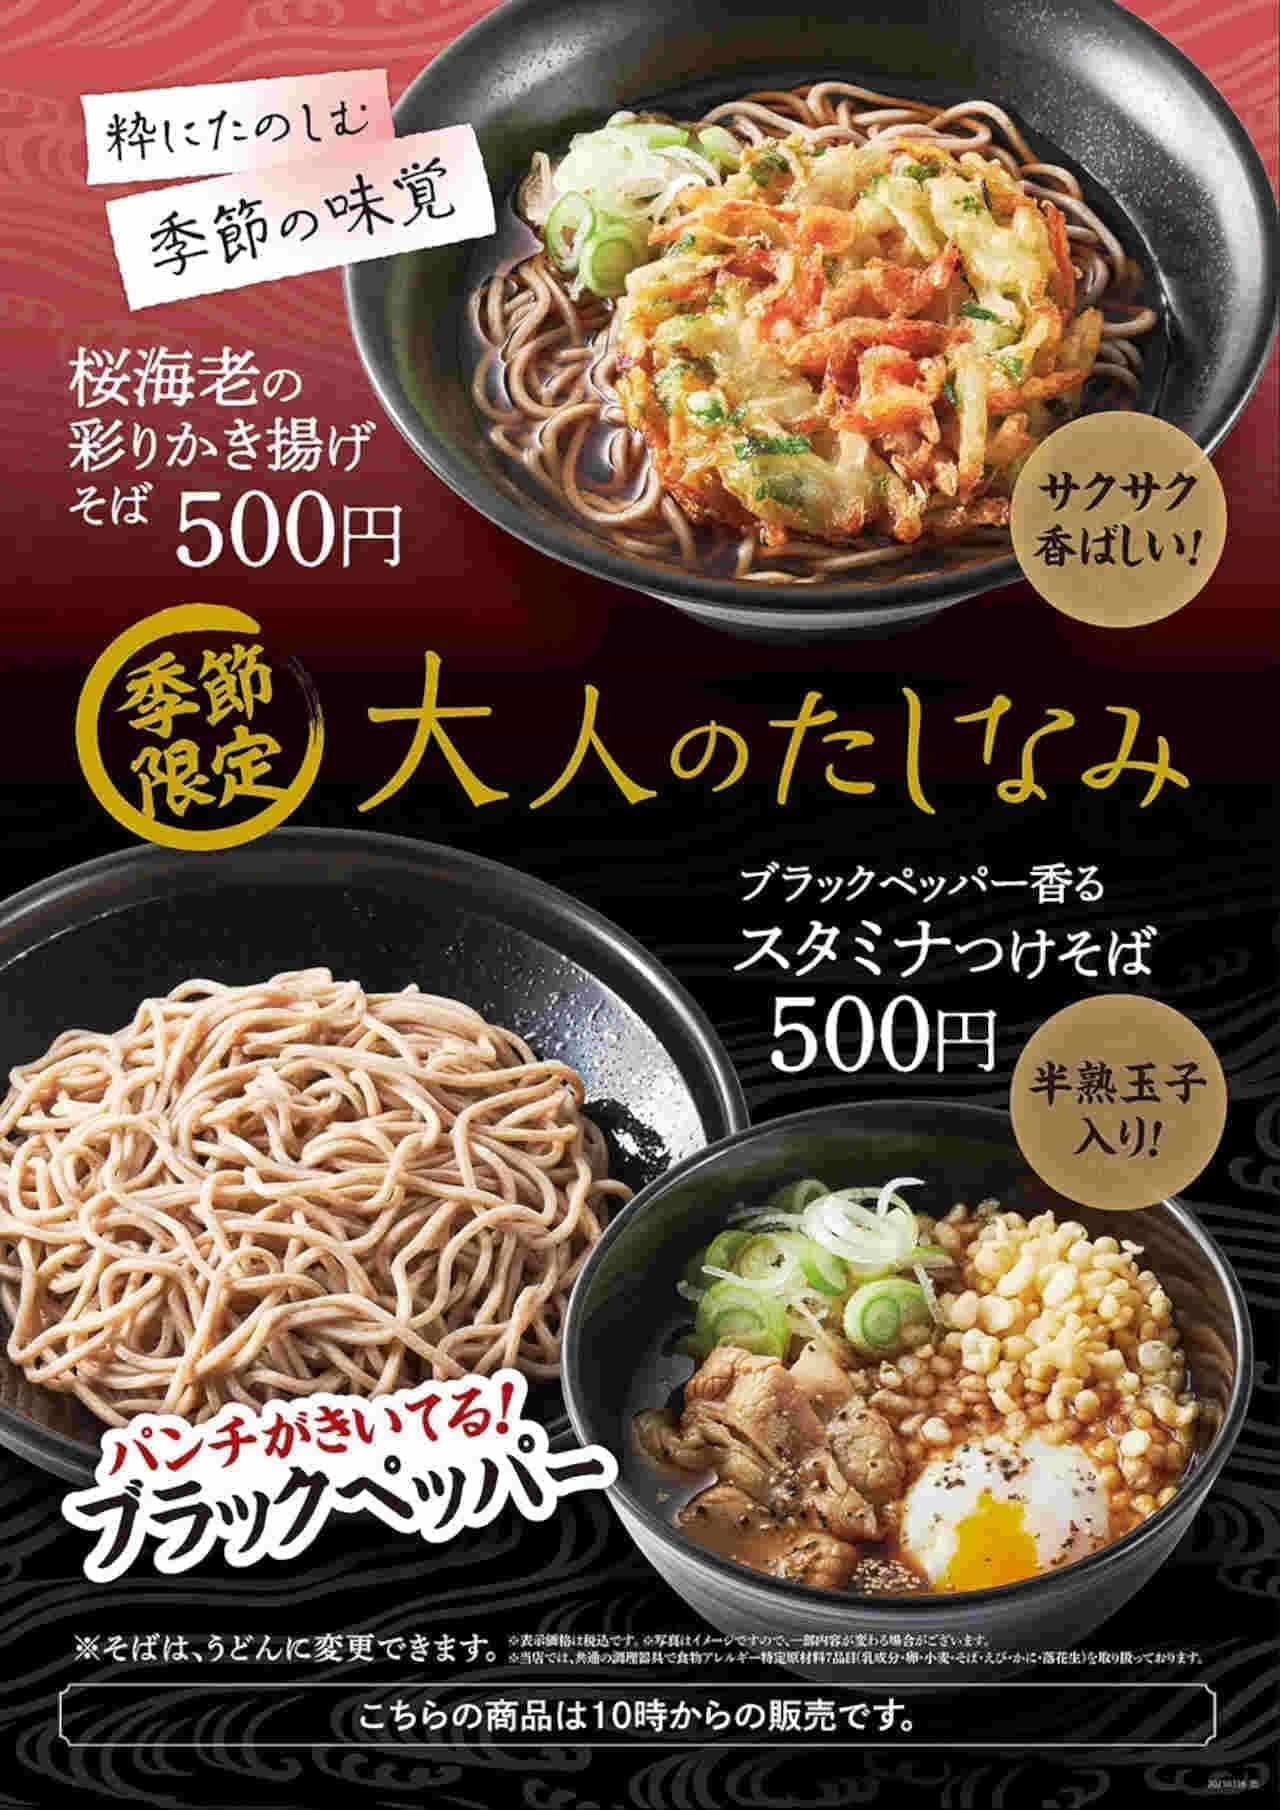 Spring menu at JR East "Irorian Kiraku" and "Station Soba"